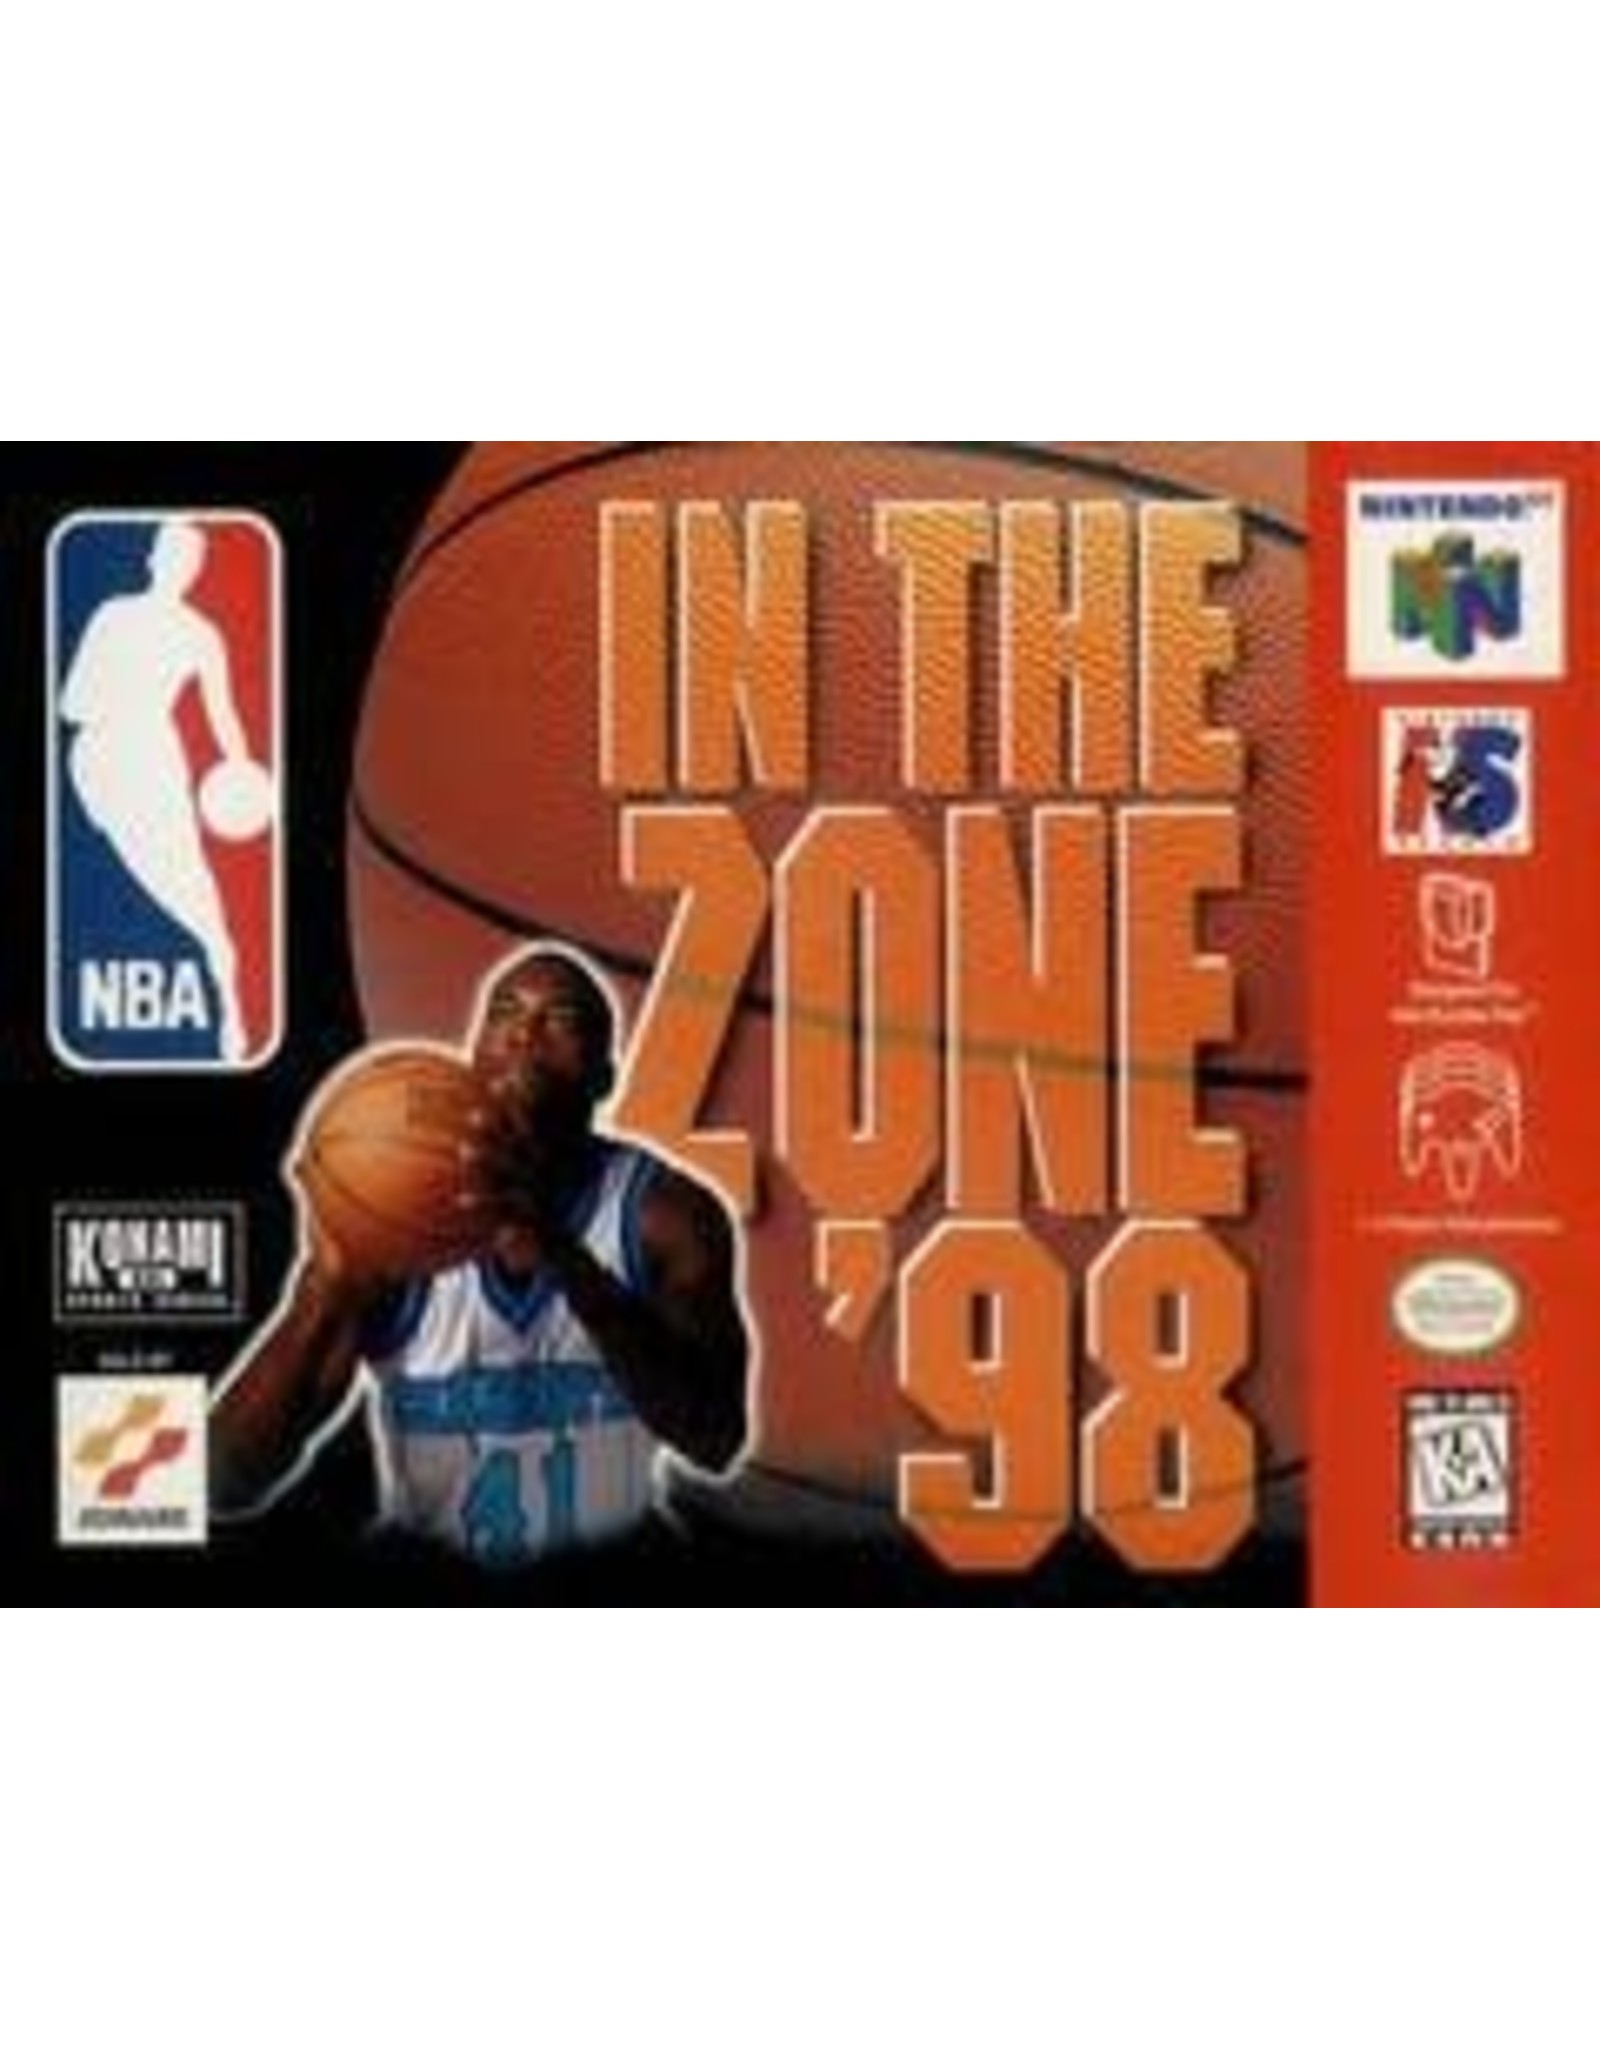 Nintendo 64 NBA In the Zone '98 (CiB, Damaged Box, Stickered and Damaged Manual)